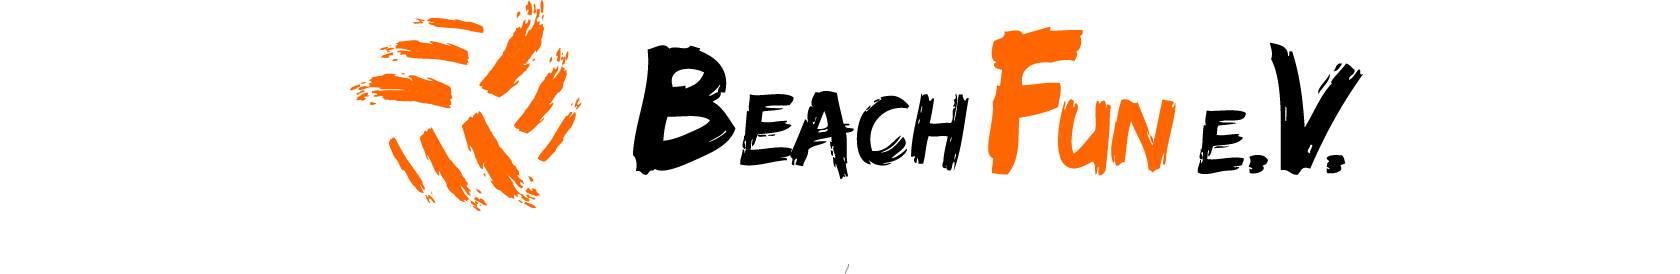 beachfun-logo